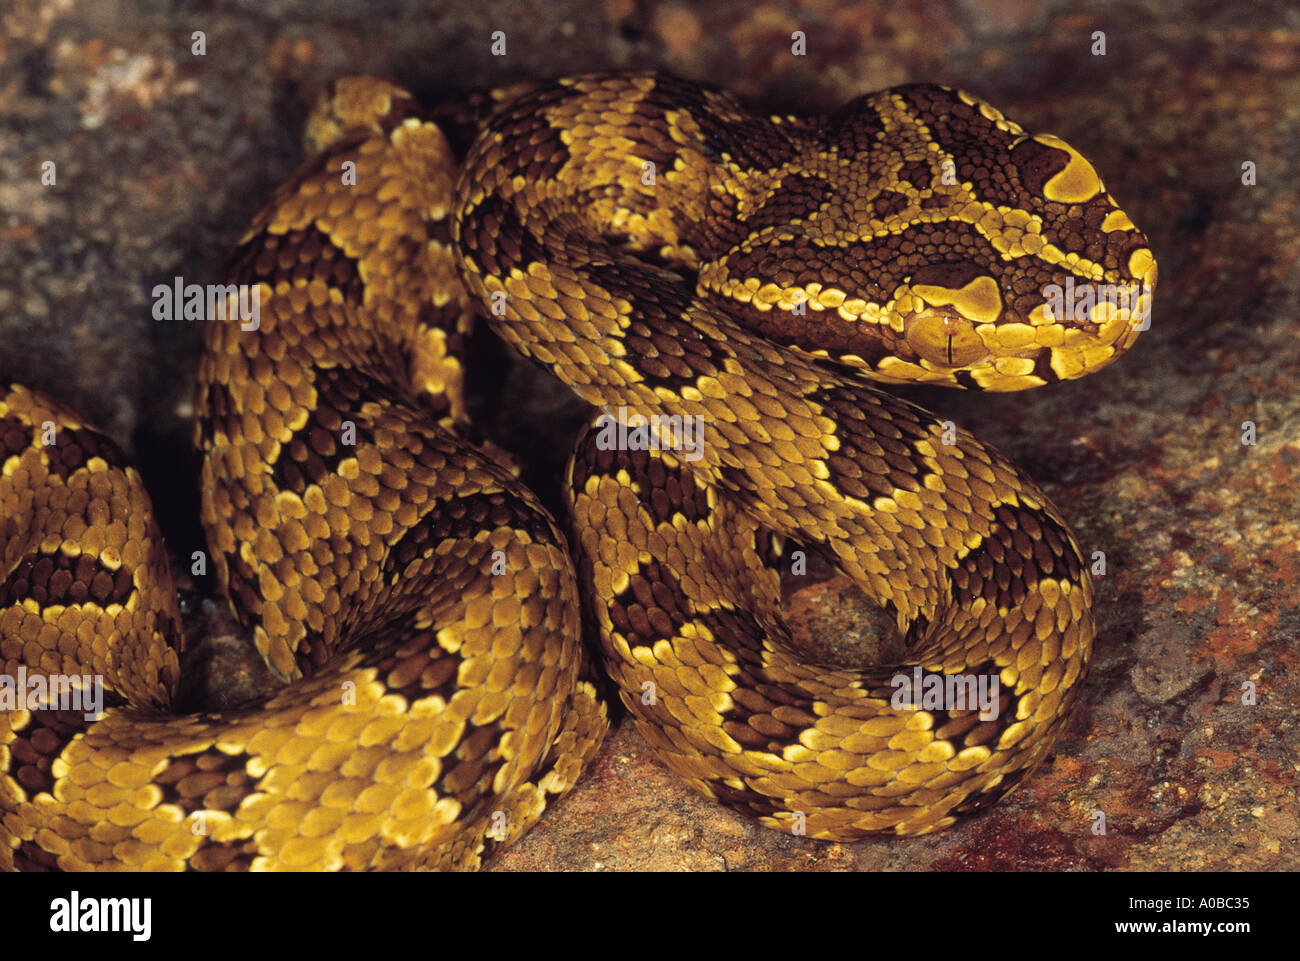 Protobothrops Jerdoni Juvenile Jerdon s Pit Viper Venomous Among the few photographs of snake in existance Arunachal Pradesh Stock Photo